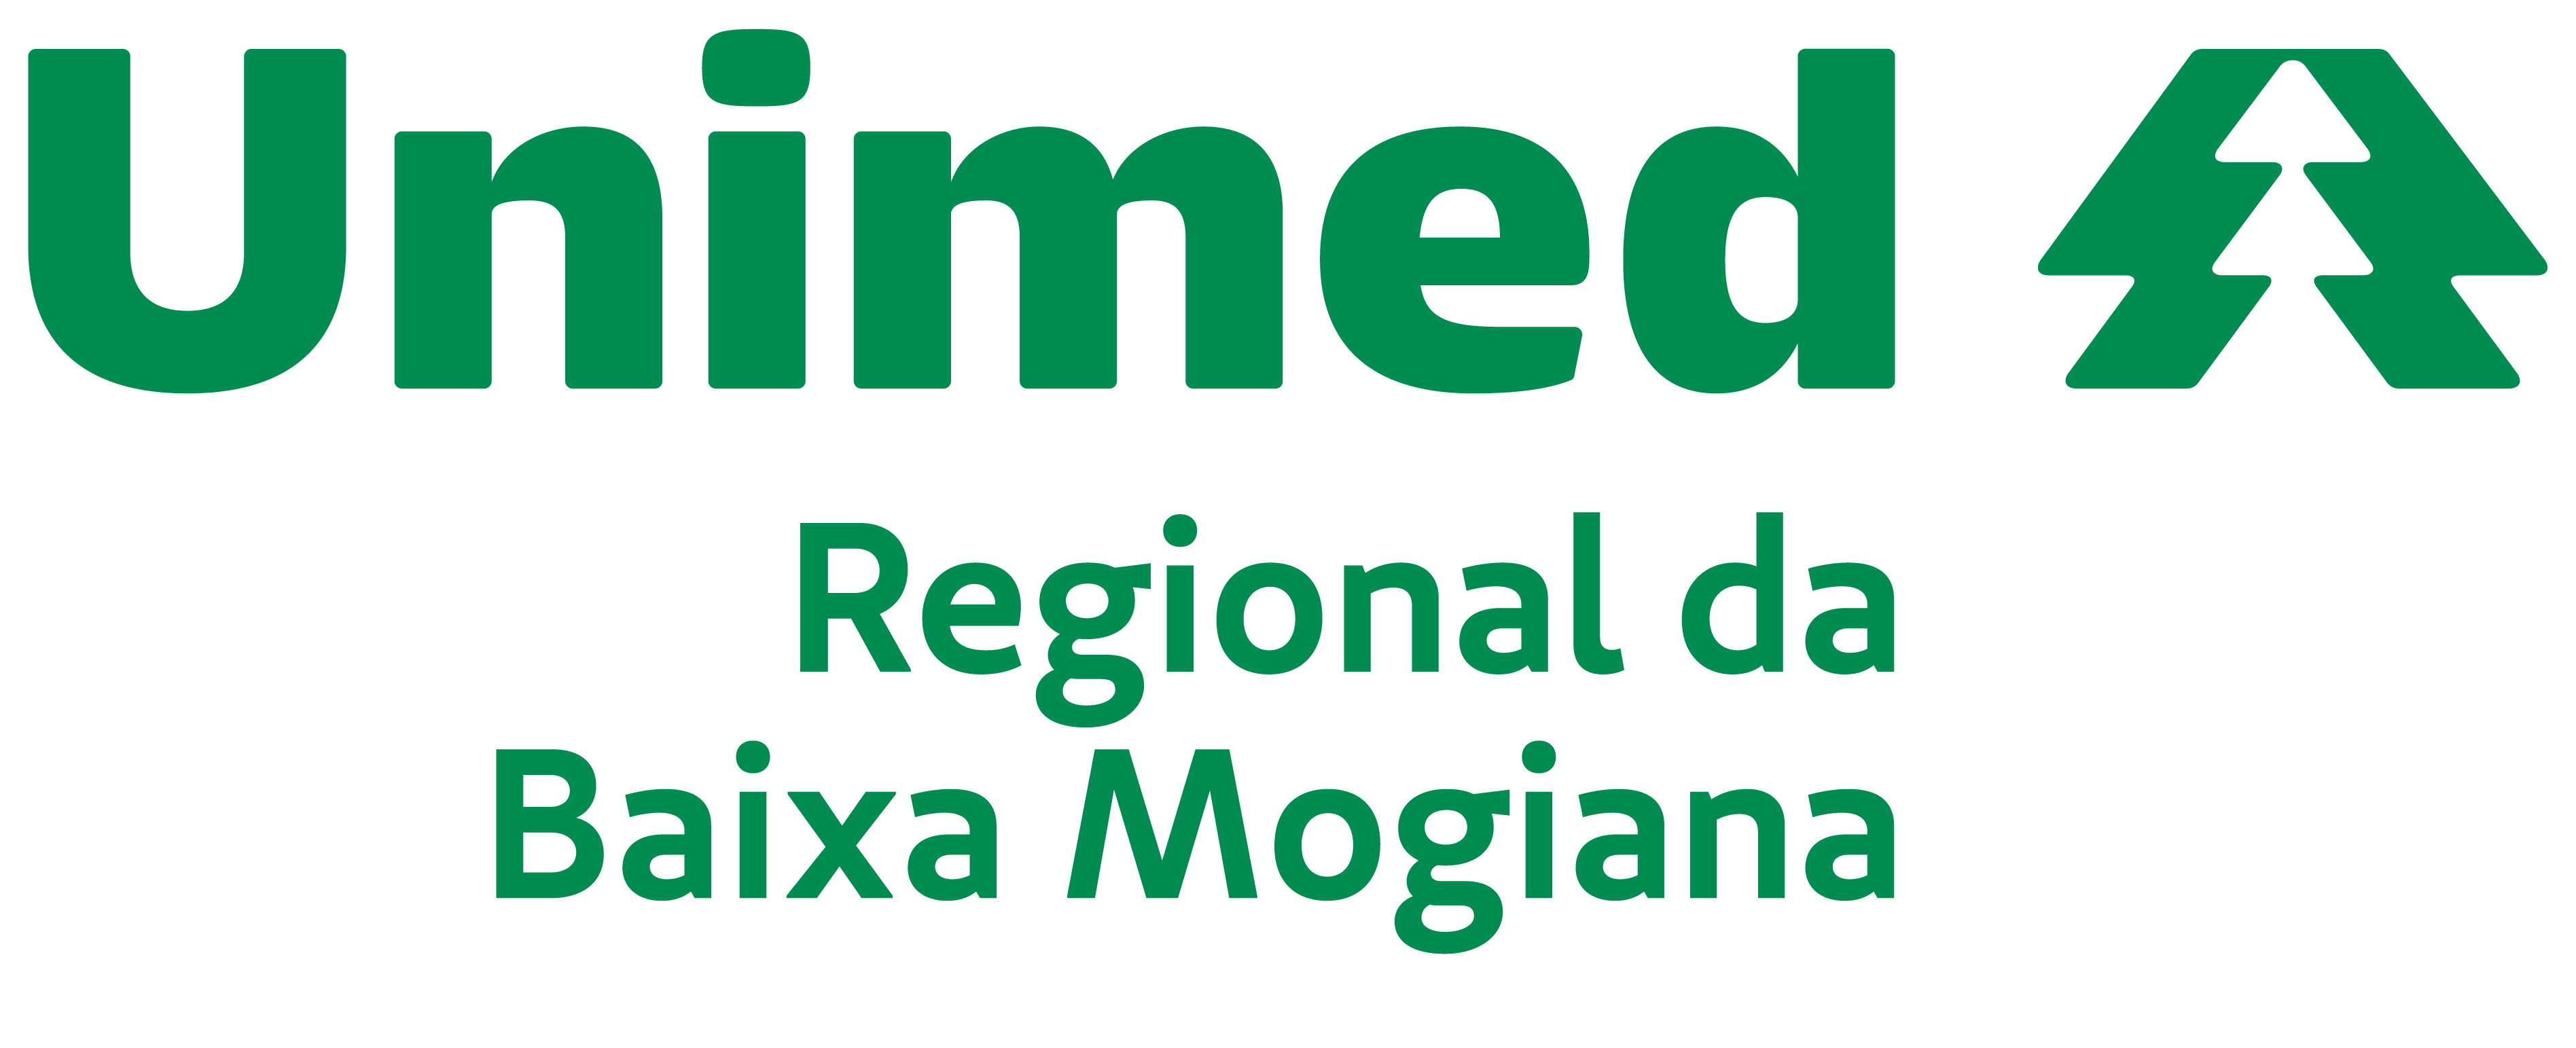 Calaméo - Guia Médico - Unimed 2014 15x21